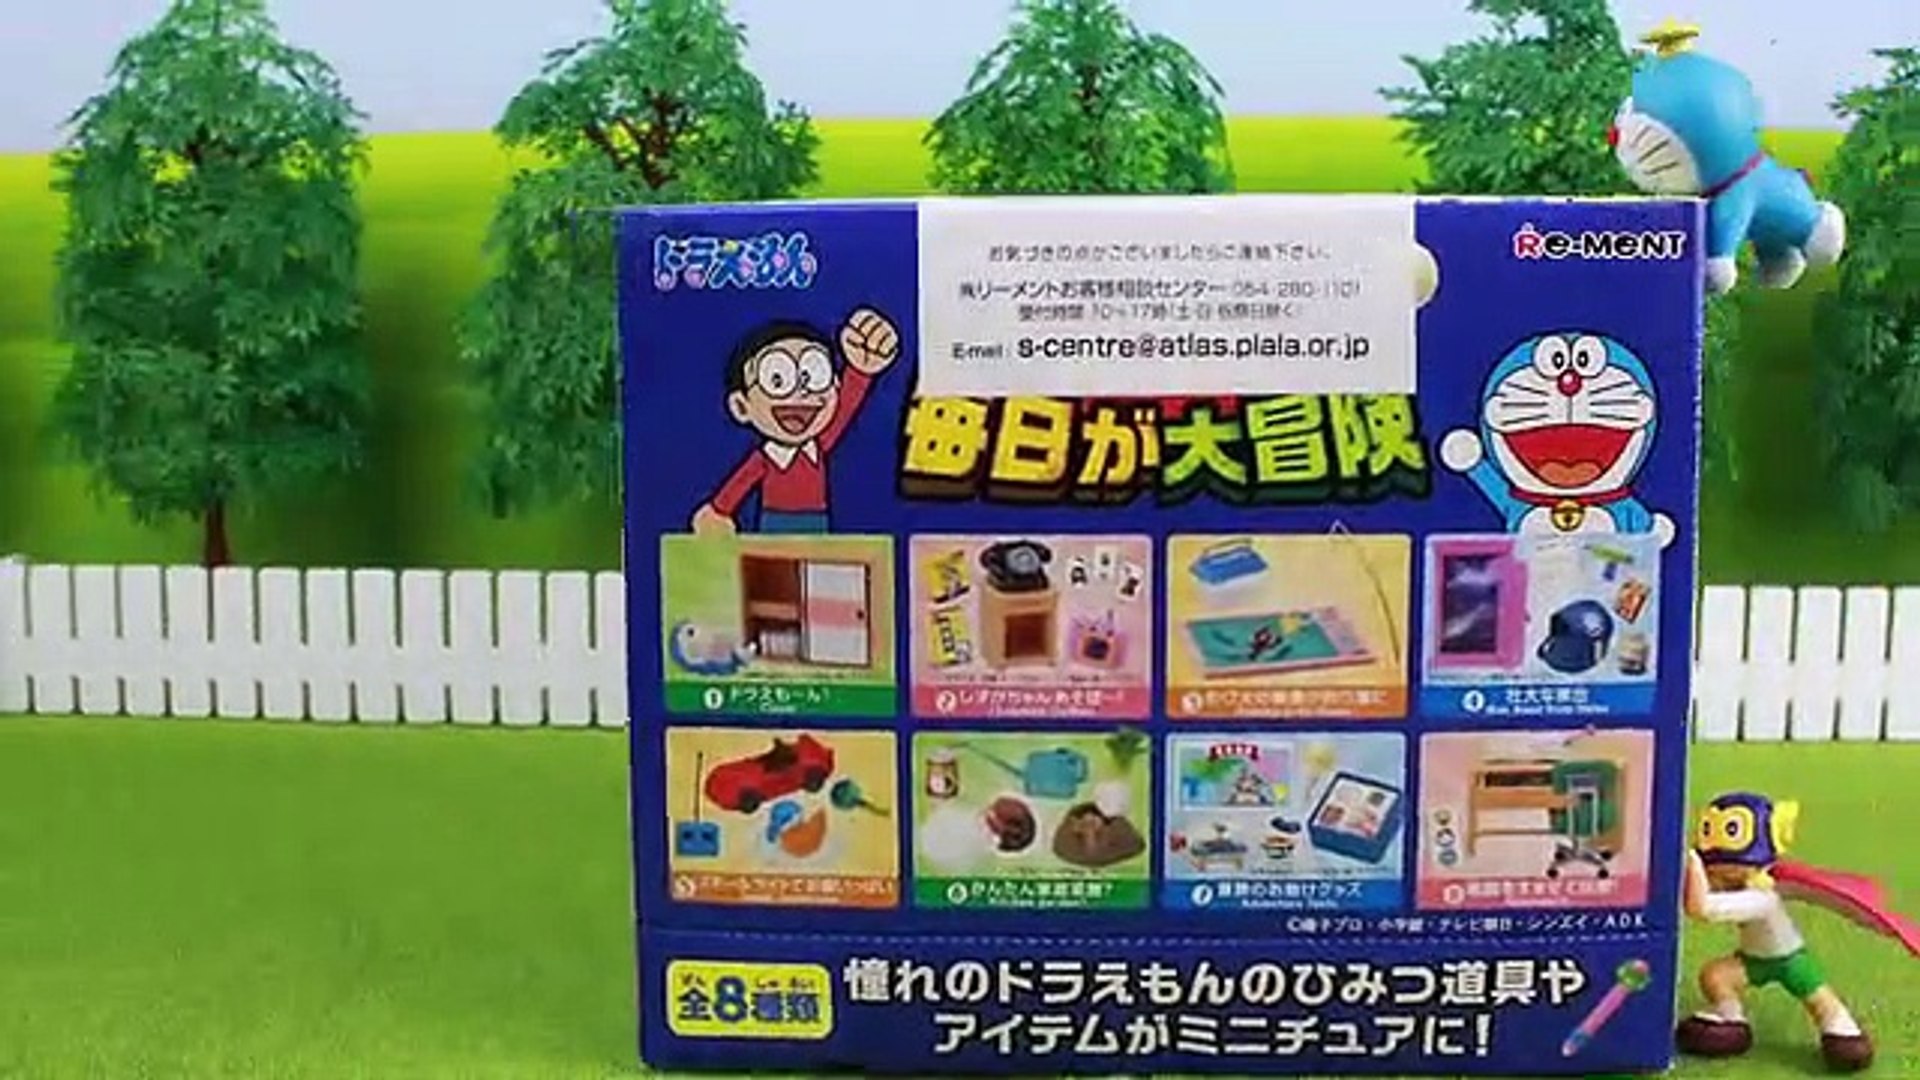 Doraemon Toy Everyday Adventure Re Ment Miniature Toys Stopmotion Video Dailymotion